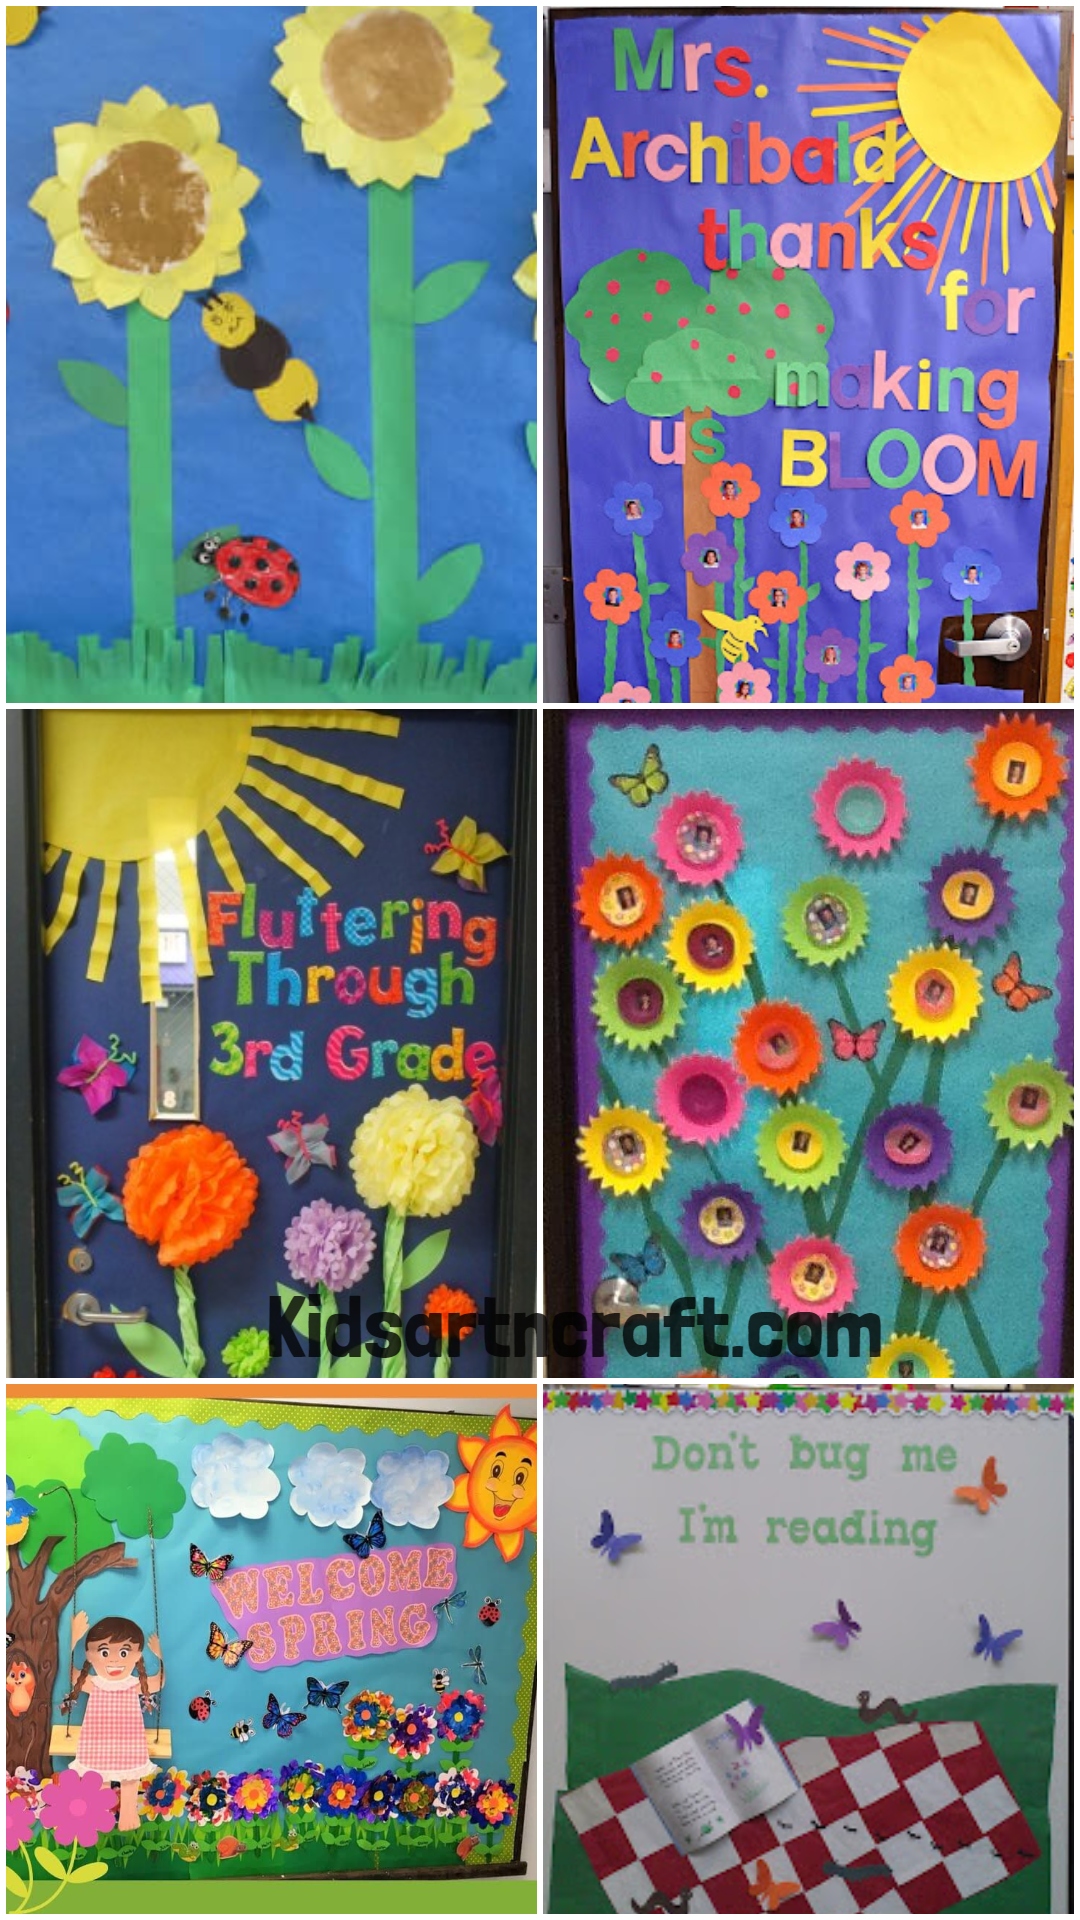 Bulletin board ideas for spring classroom decoration